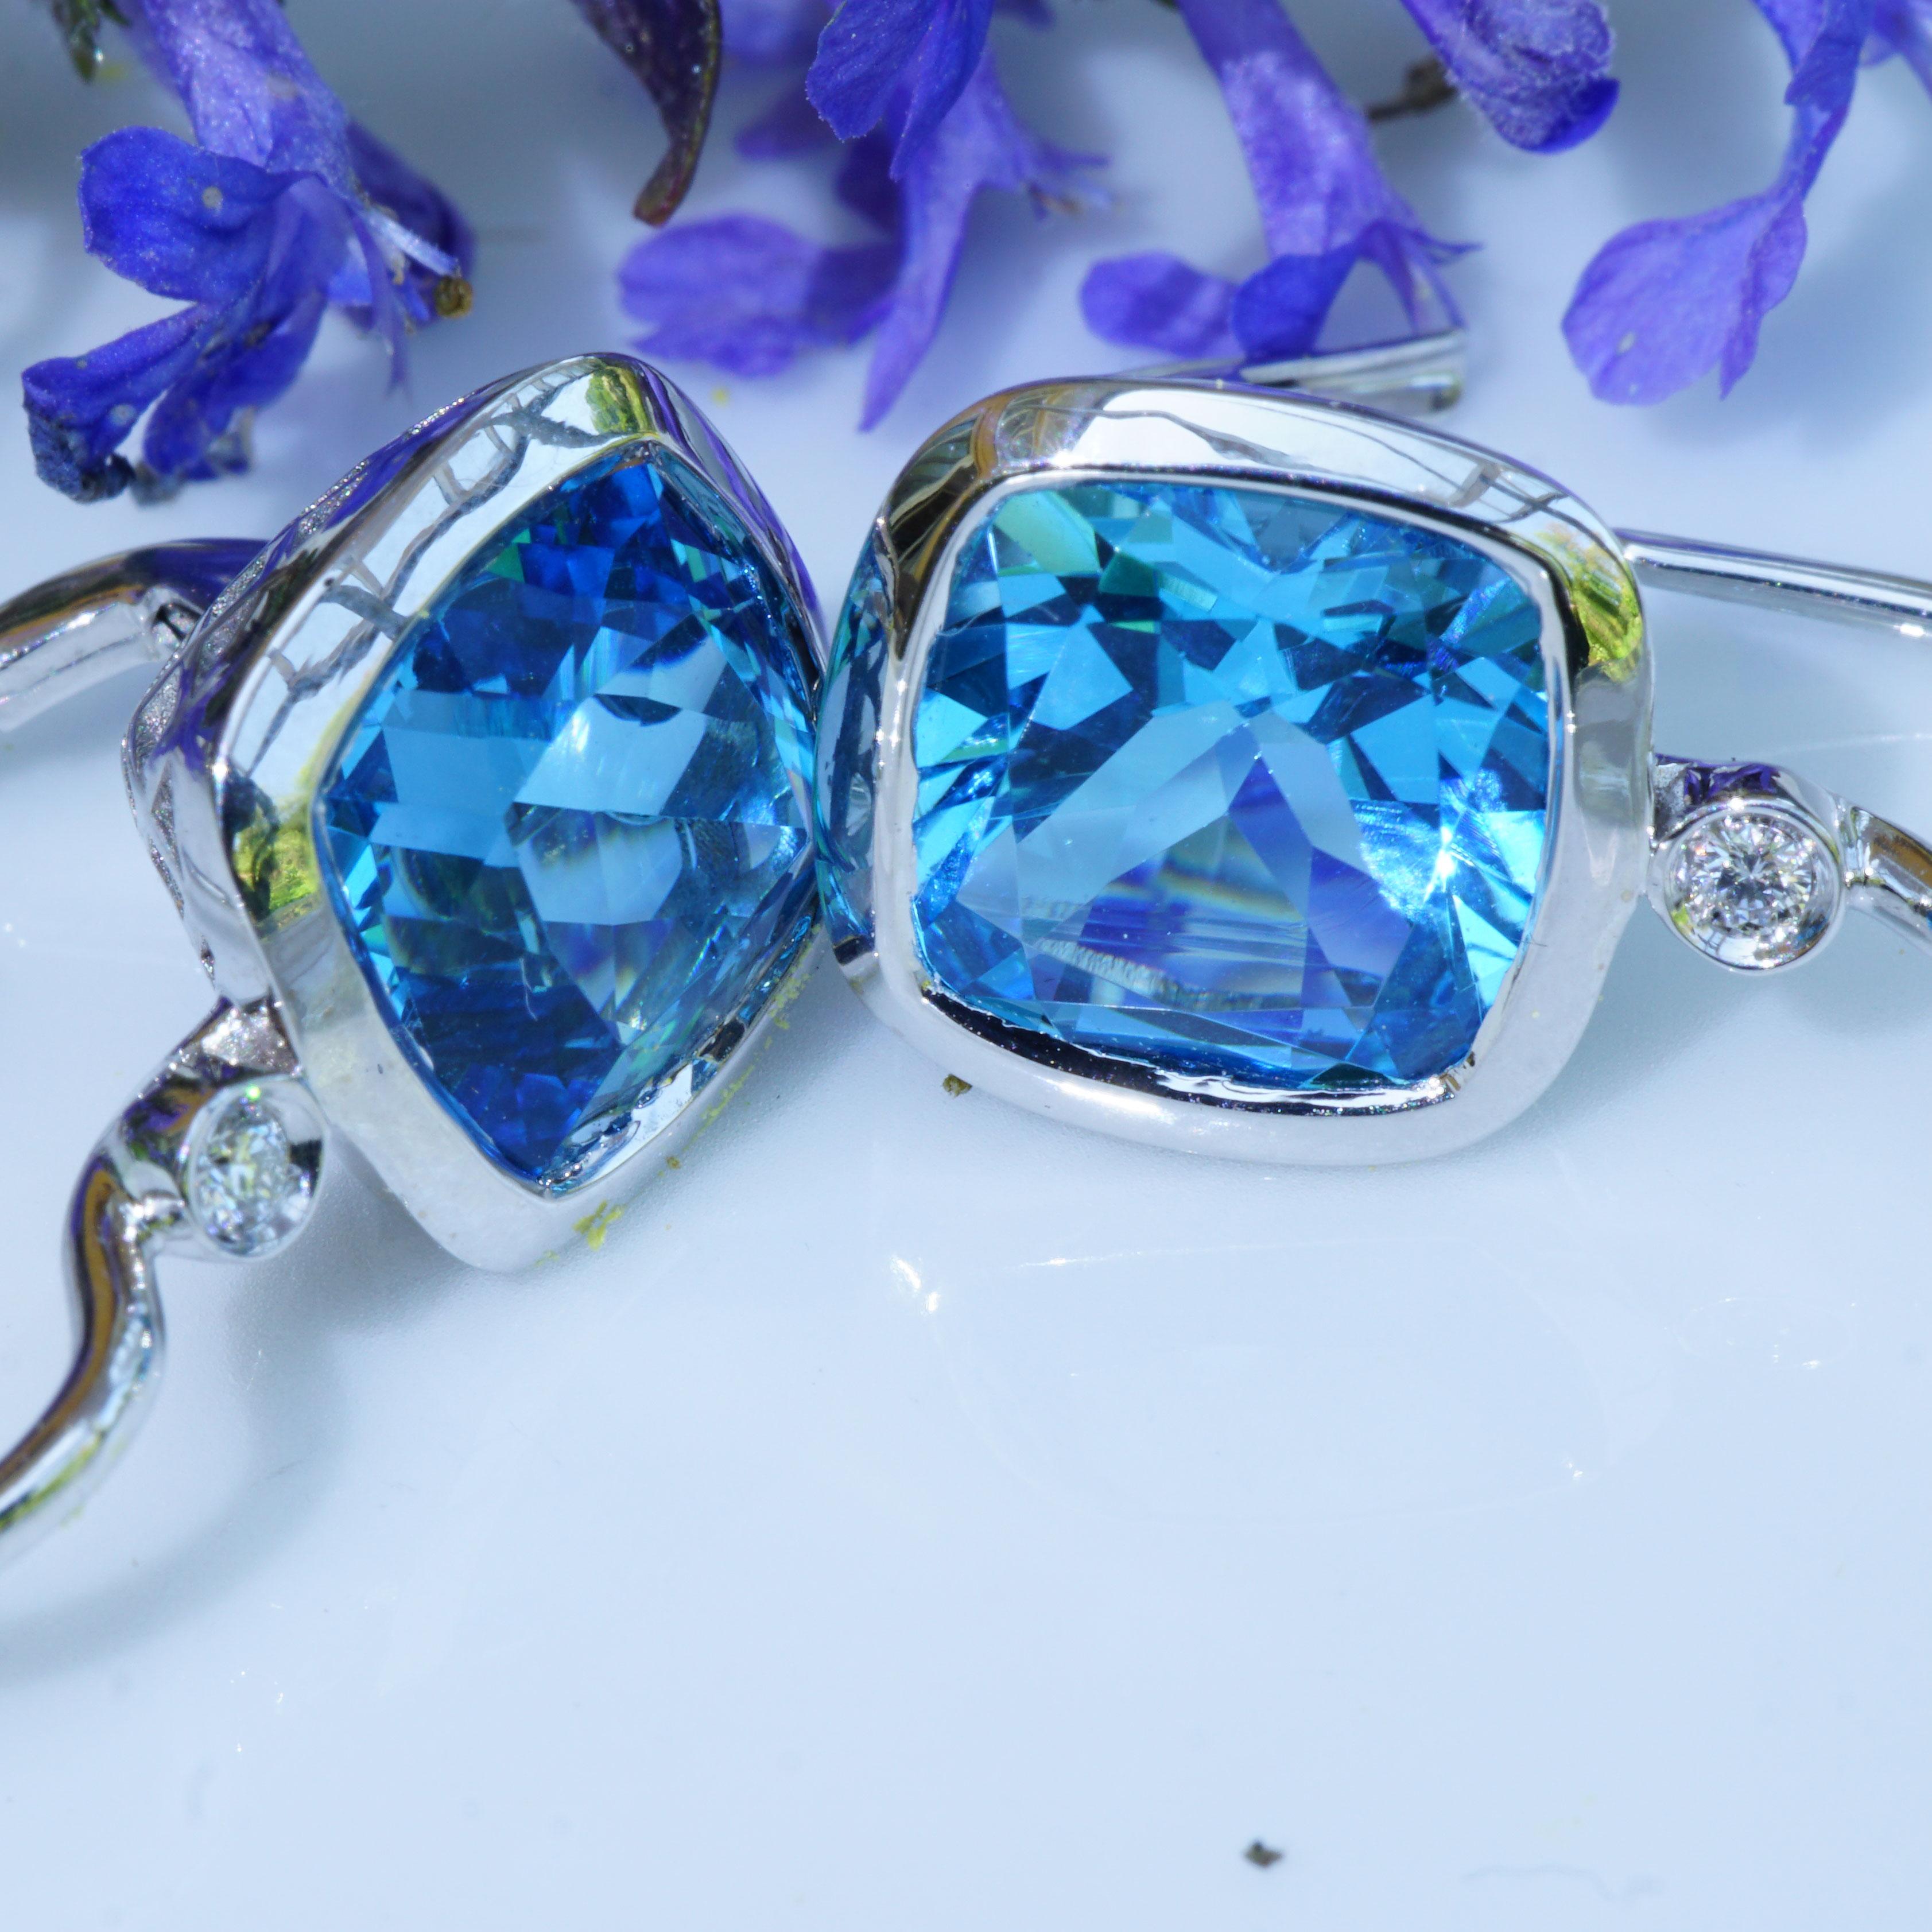 Blue Topaz and Diamonds Earrings Very Modern Setting High End Italian Jewellery  For Sale 3